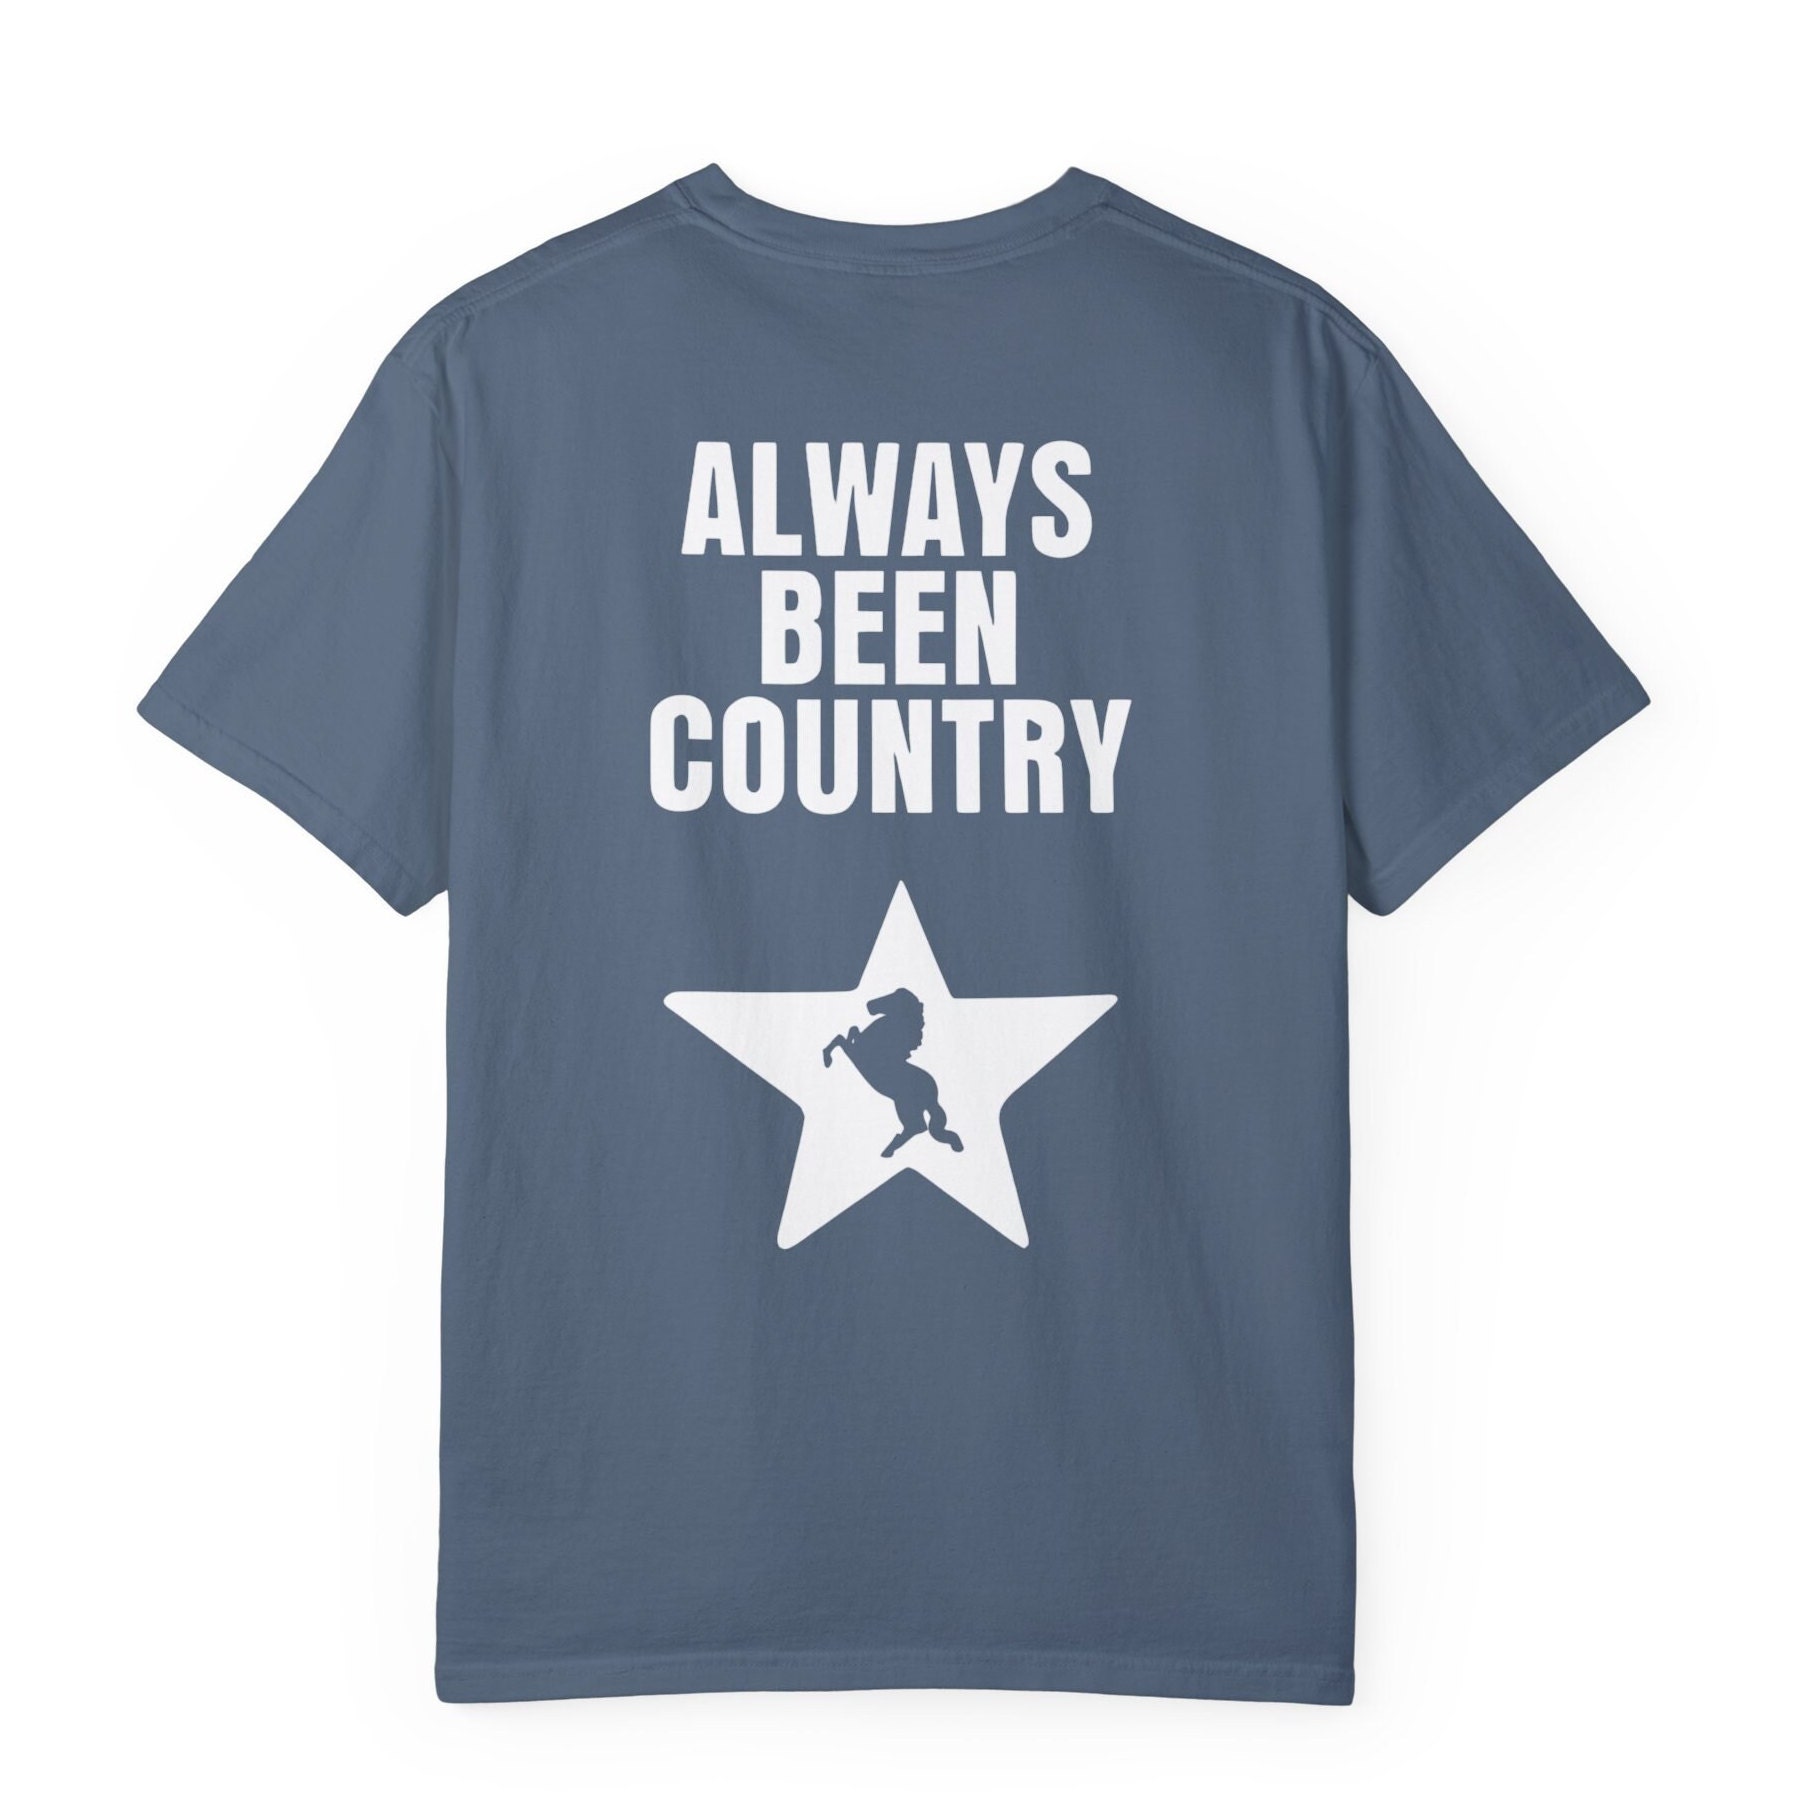 Beyonce Cowboy Carter Shirt:  "Always Been Country," Renaissance act ii